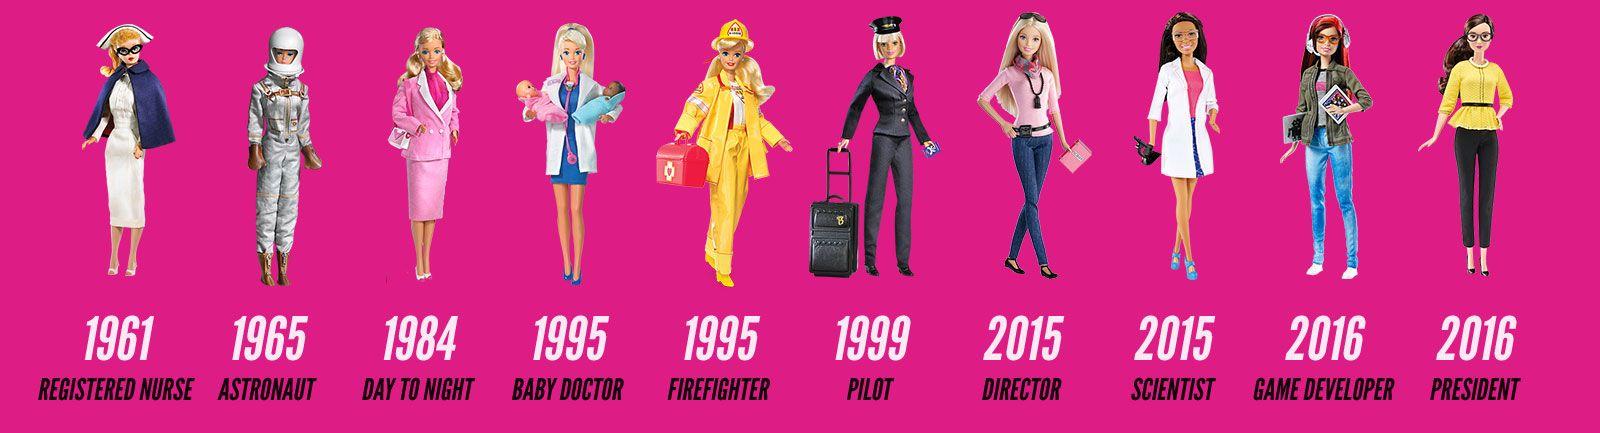 Barbie 2017 Logo - The History Of Barbie